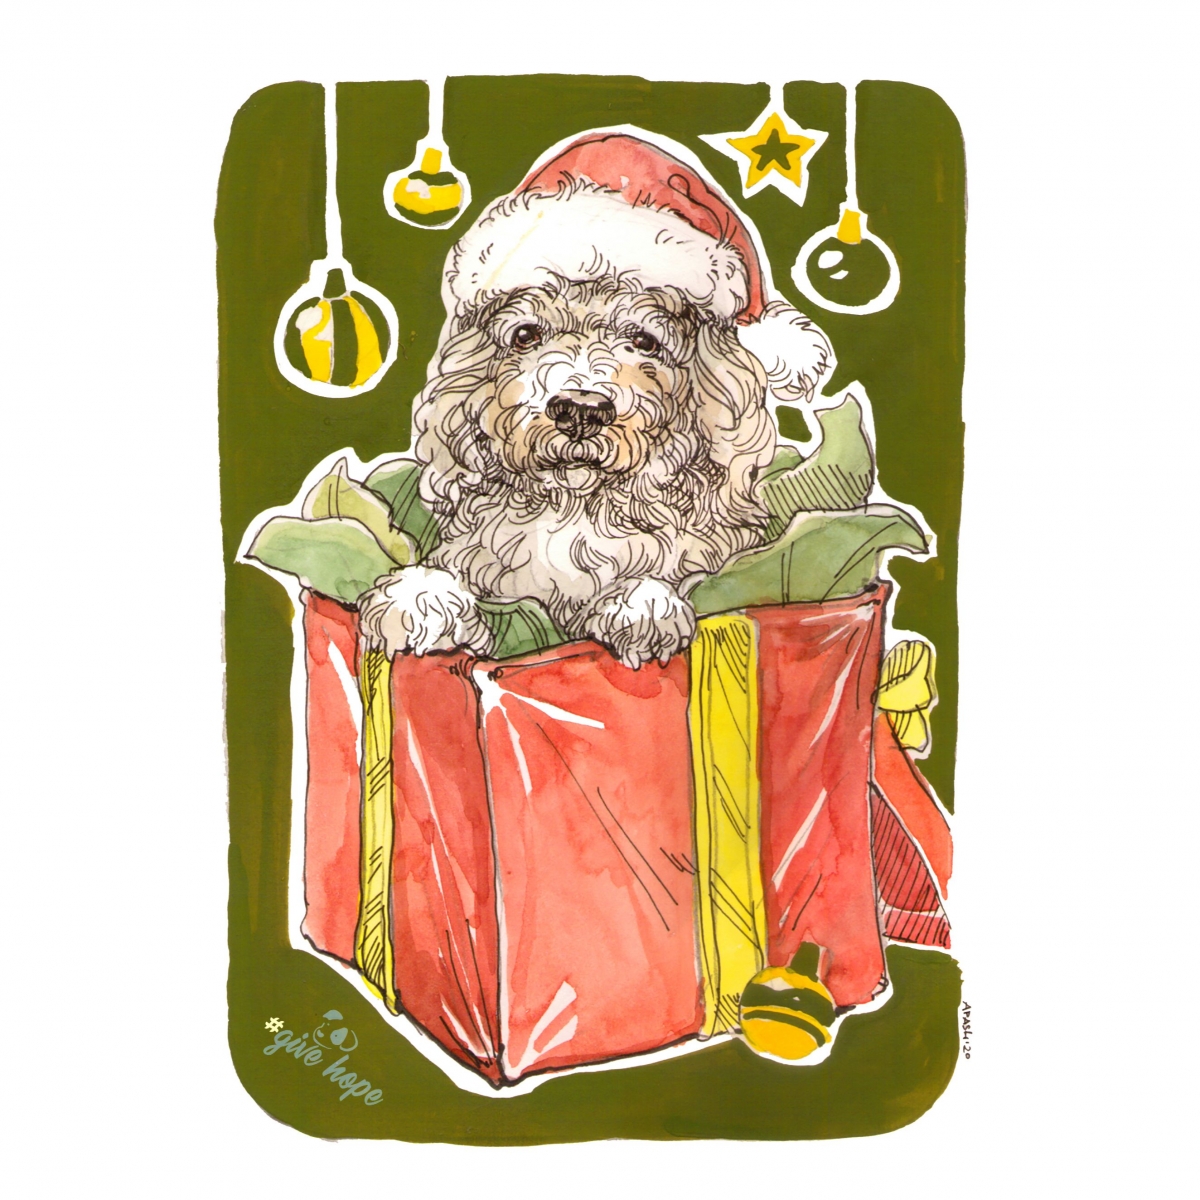 Send ROLDA Christmas e-cards that save dogs lives eCards